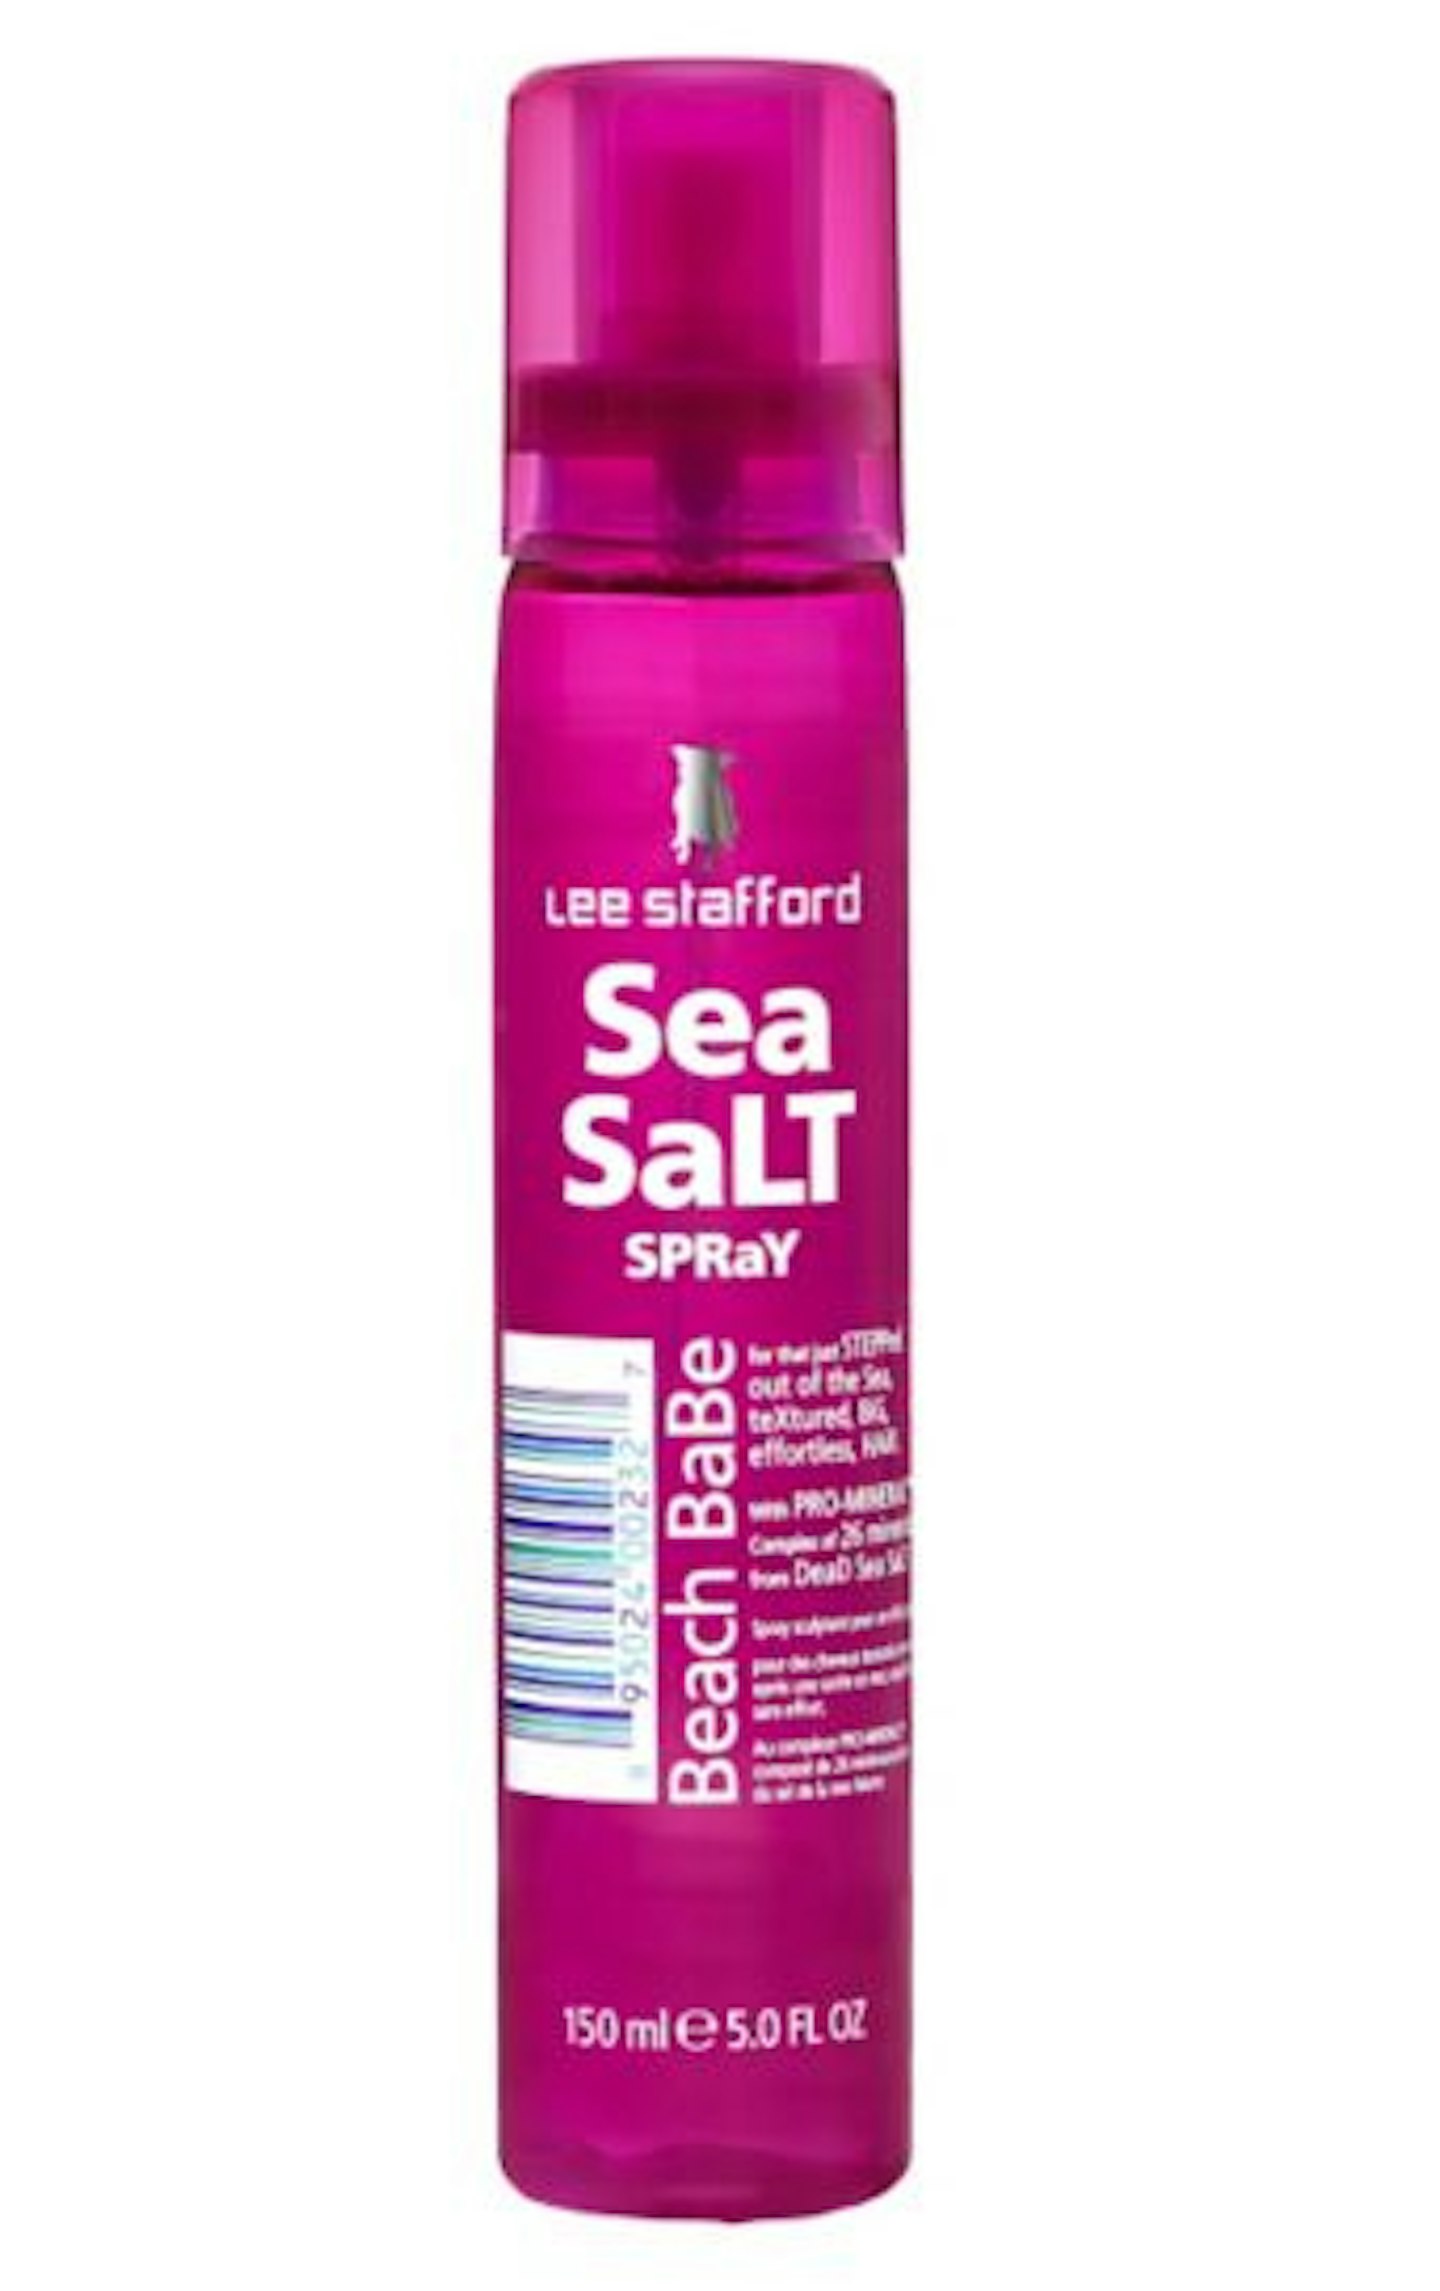 Lee Stafford Beach Babe Sea Salt Spray £7.99